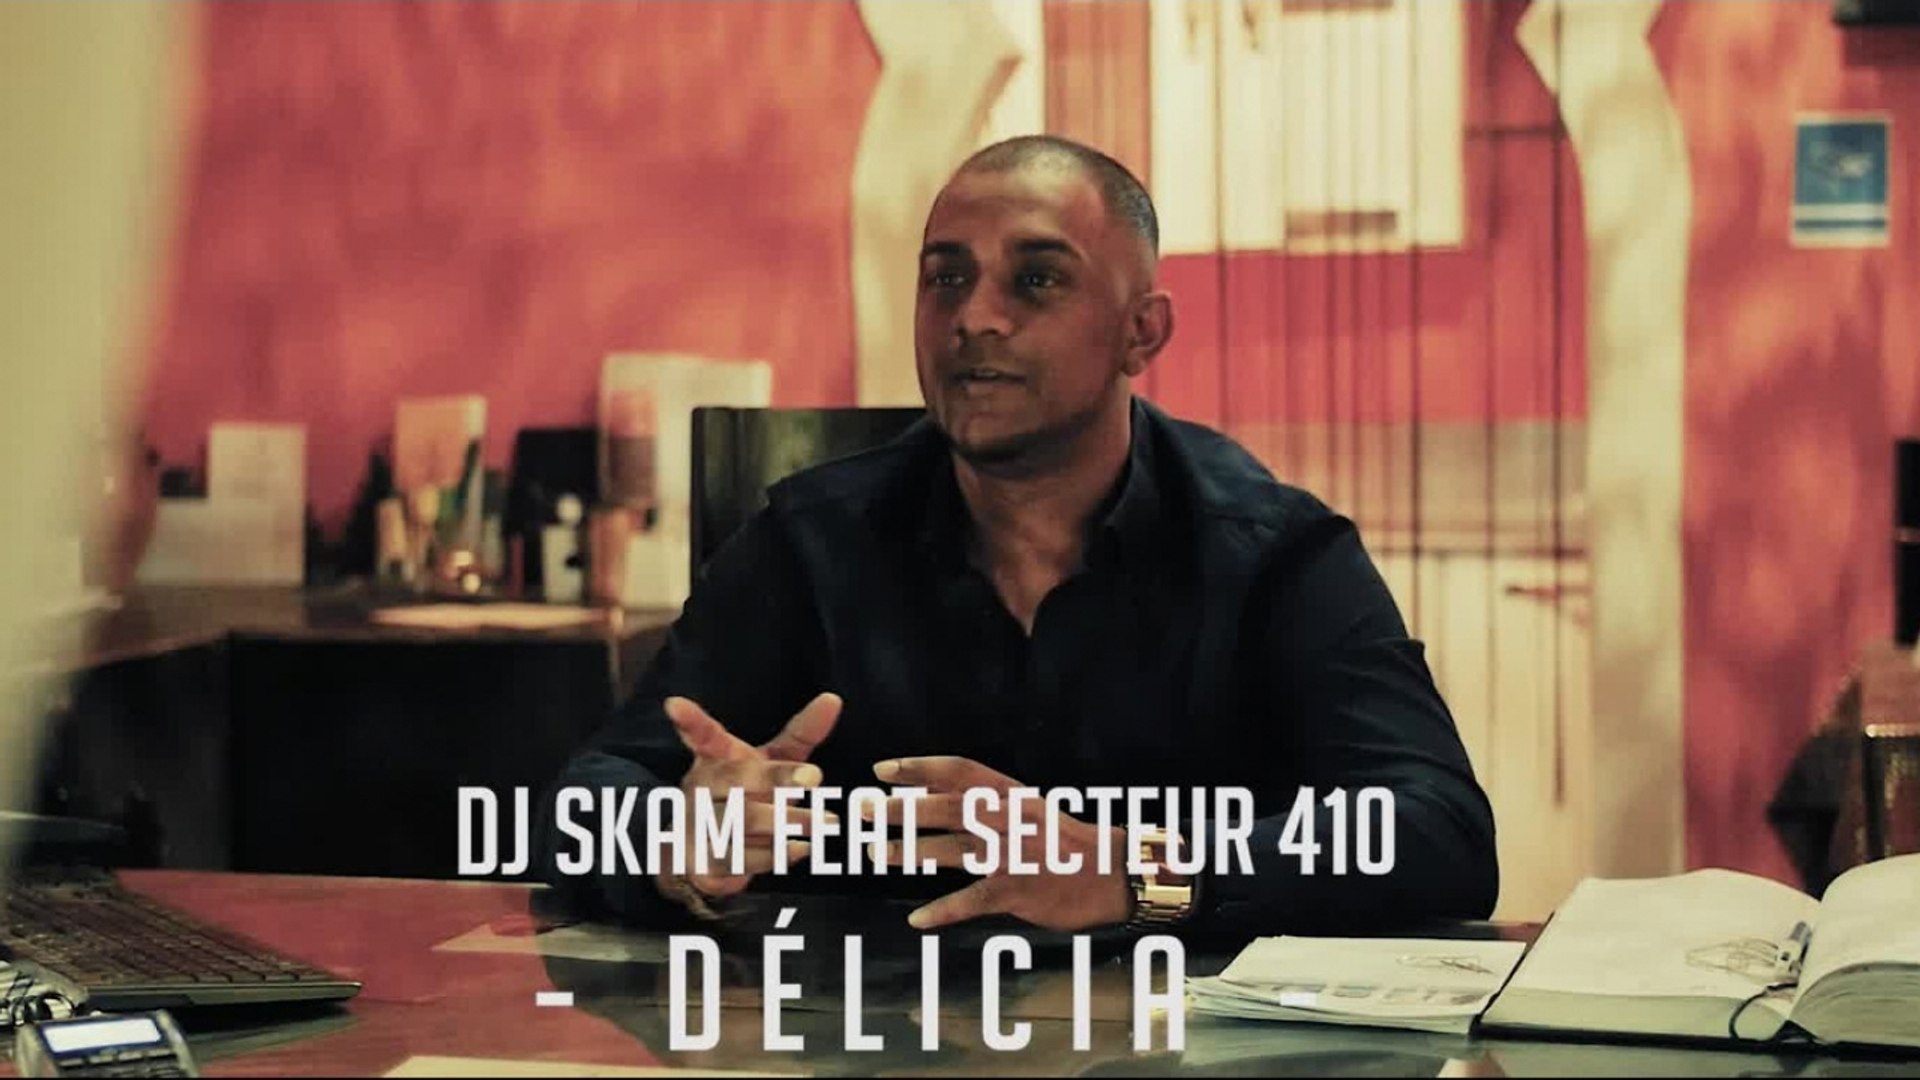 DJ Skam Ft. Secteur 410 - Delicia - Official Music Video - Vidéo Dailymotion